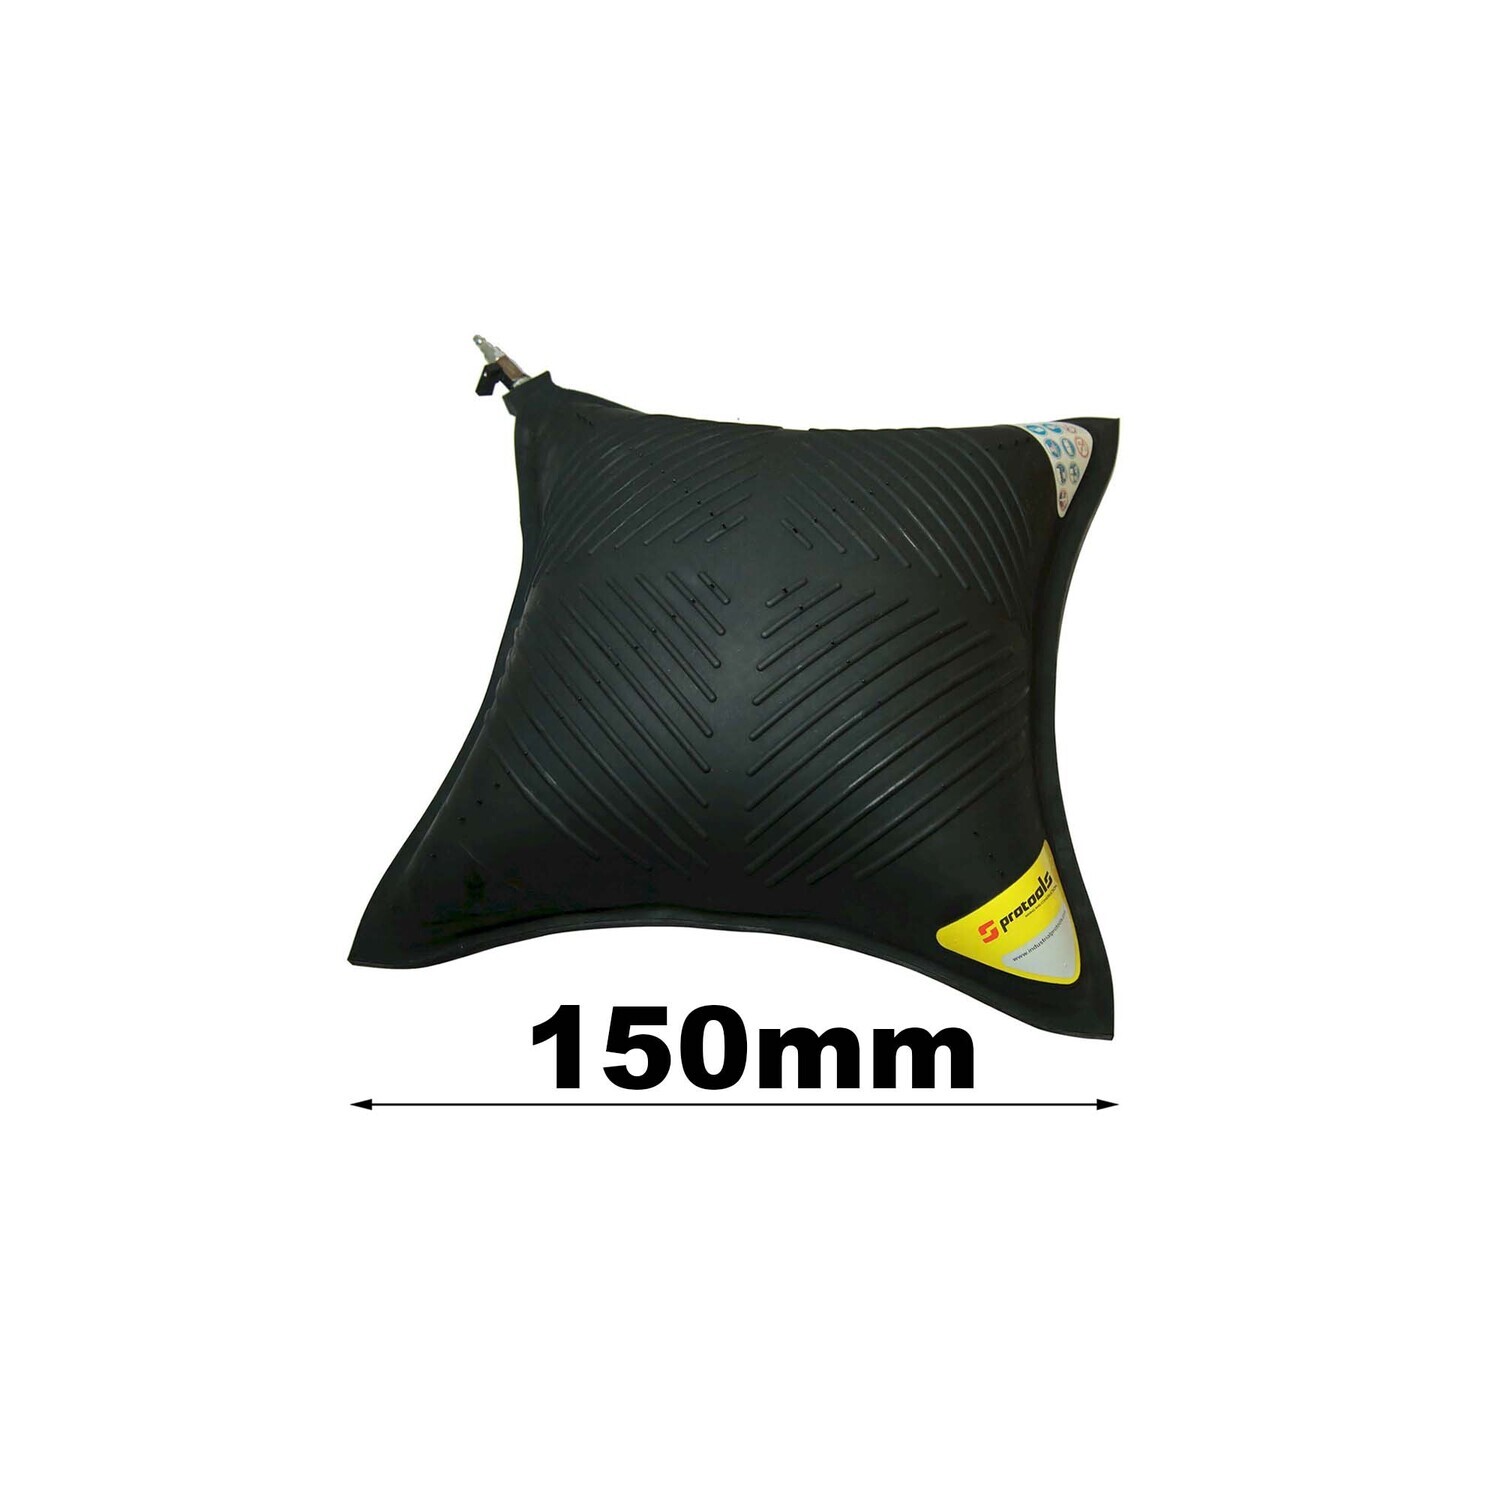 PBR01 Lifting bag - Capacity 1t